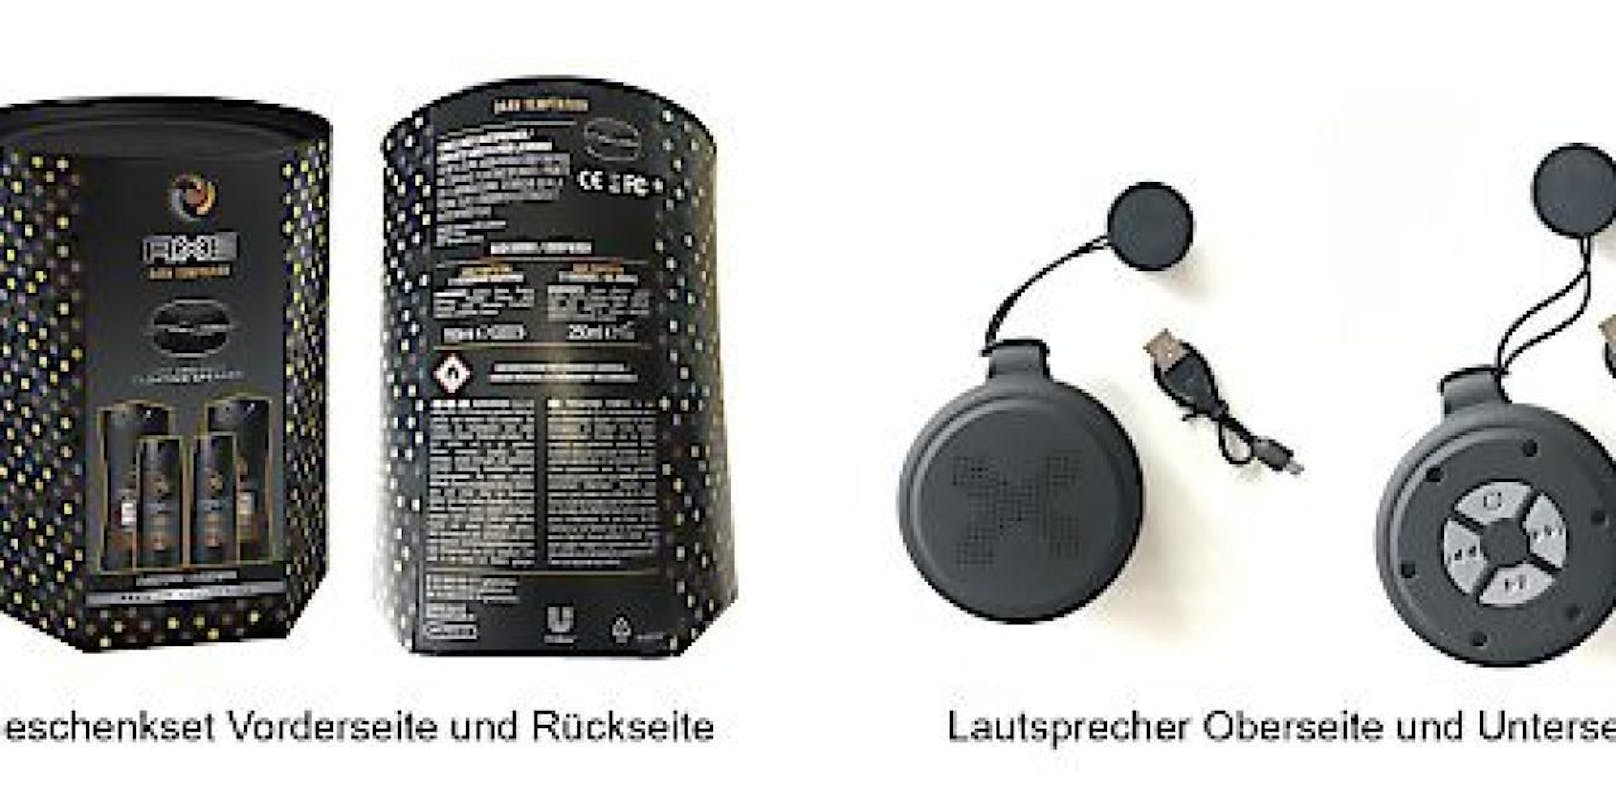 Lautsprecher-Ladekabel können überhitzen